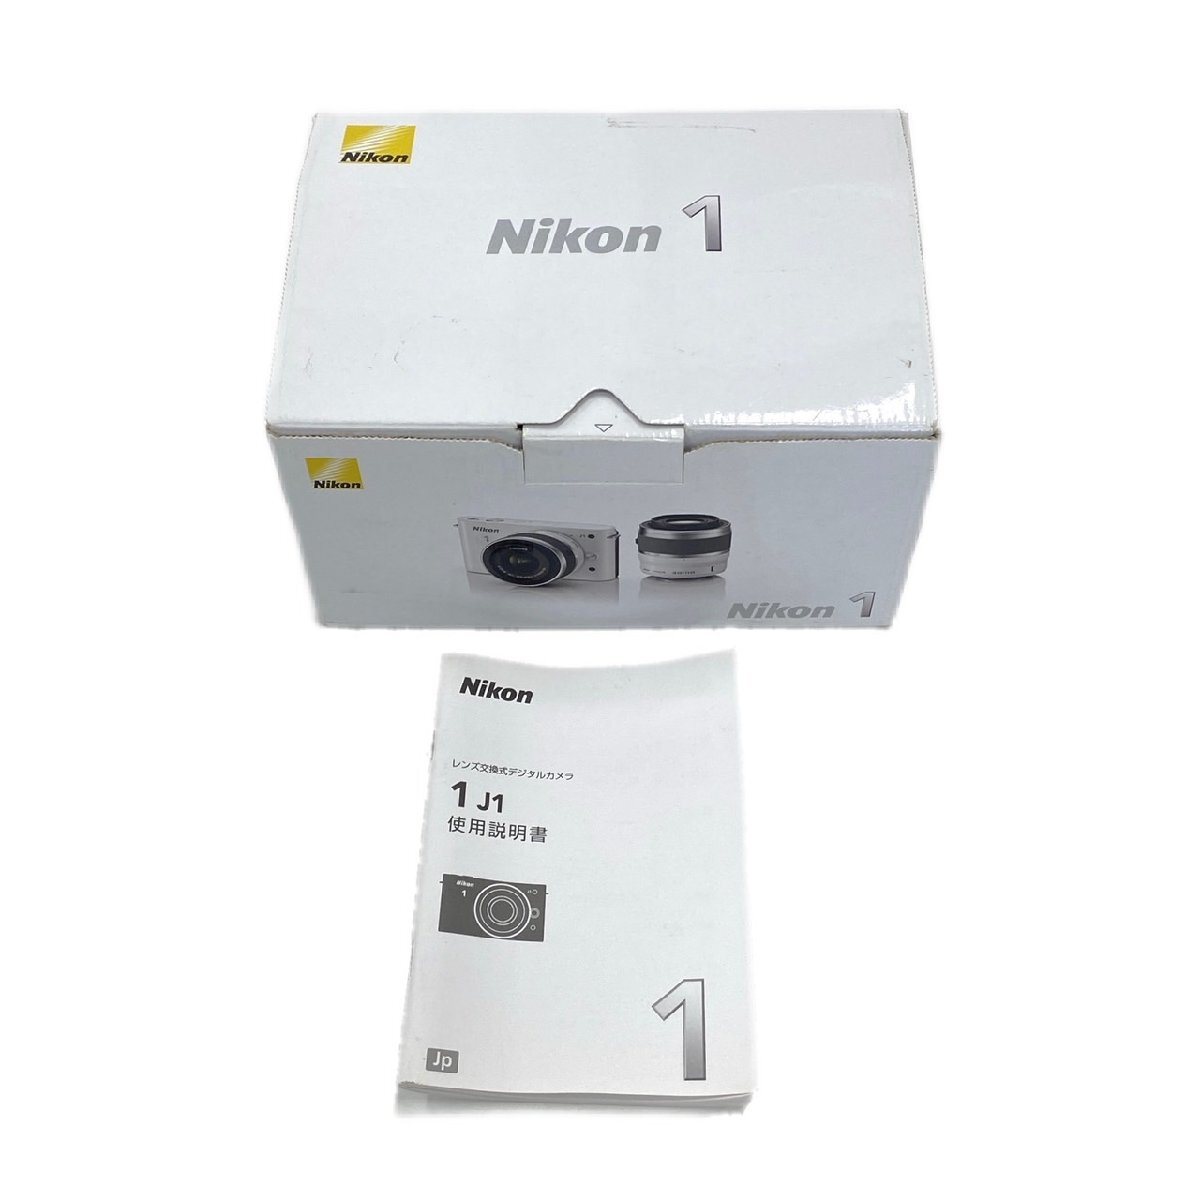 1 jpy start Nikon Nikon 1 J1 digital camera lens exchange type NIKKOR VR 30-110mm 10-30mm digital camera white box attaching consumer electronics electrification has confirmed 